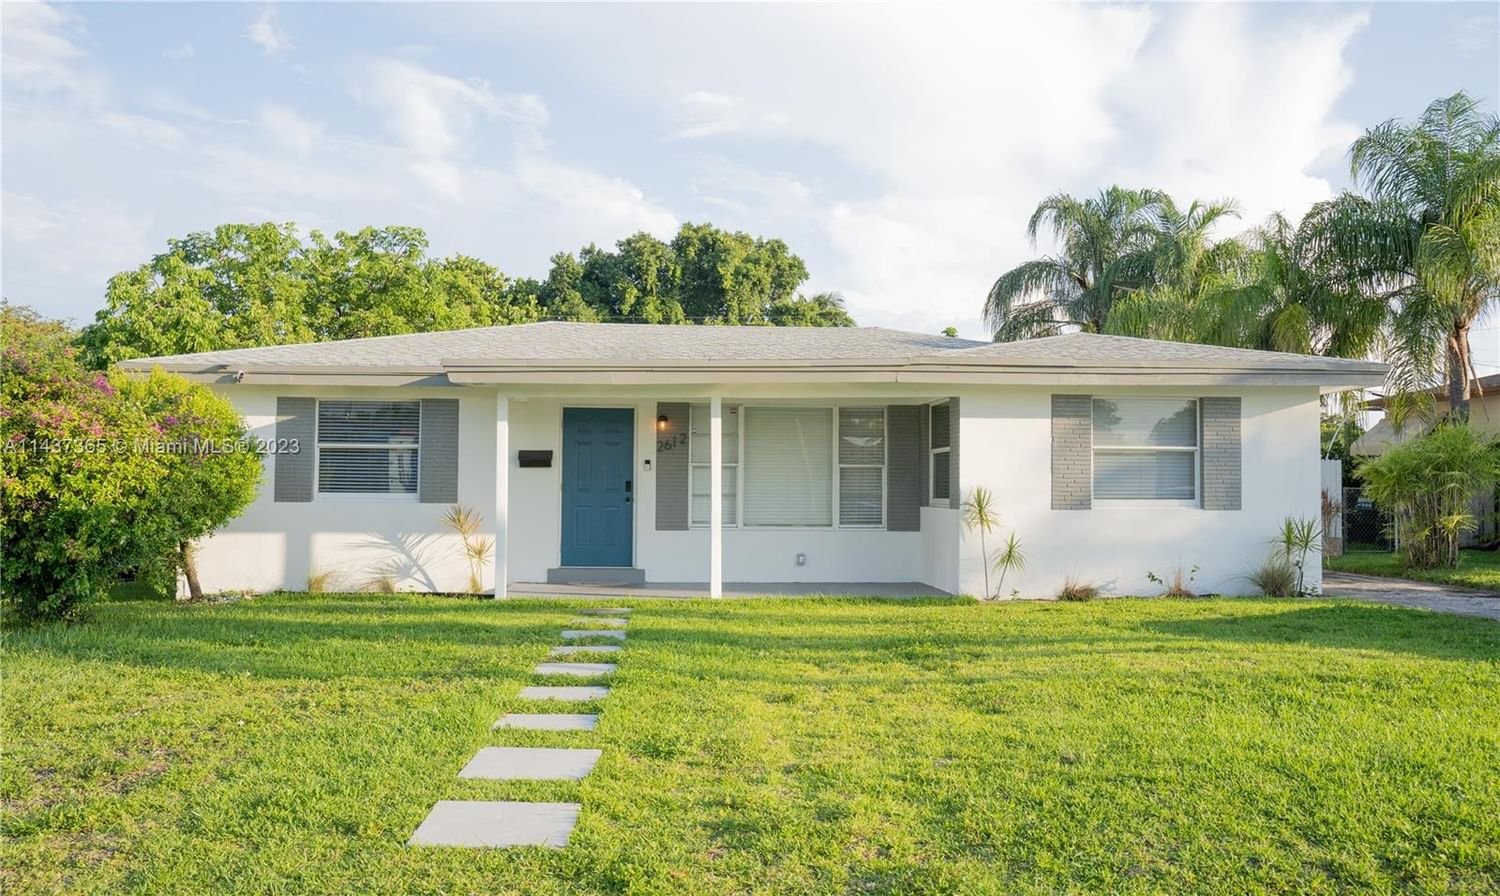 Real estate property located at 2612 Rodman St, Broward County, SOUTH HOLLYWOOD AMD PLAT, Hollywood, FL